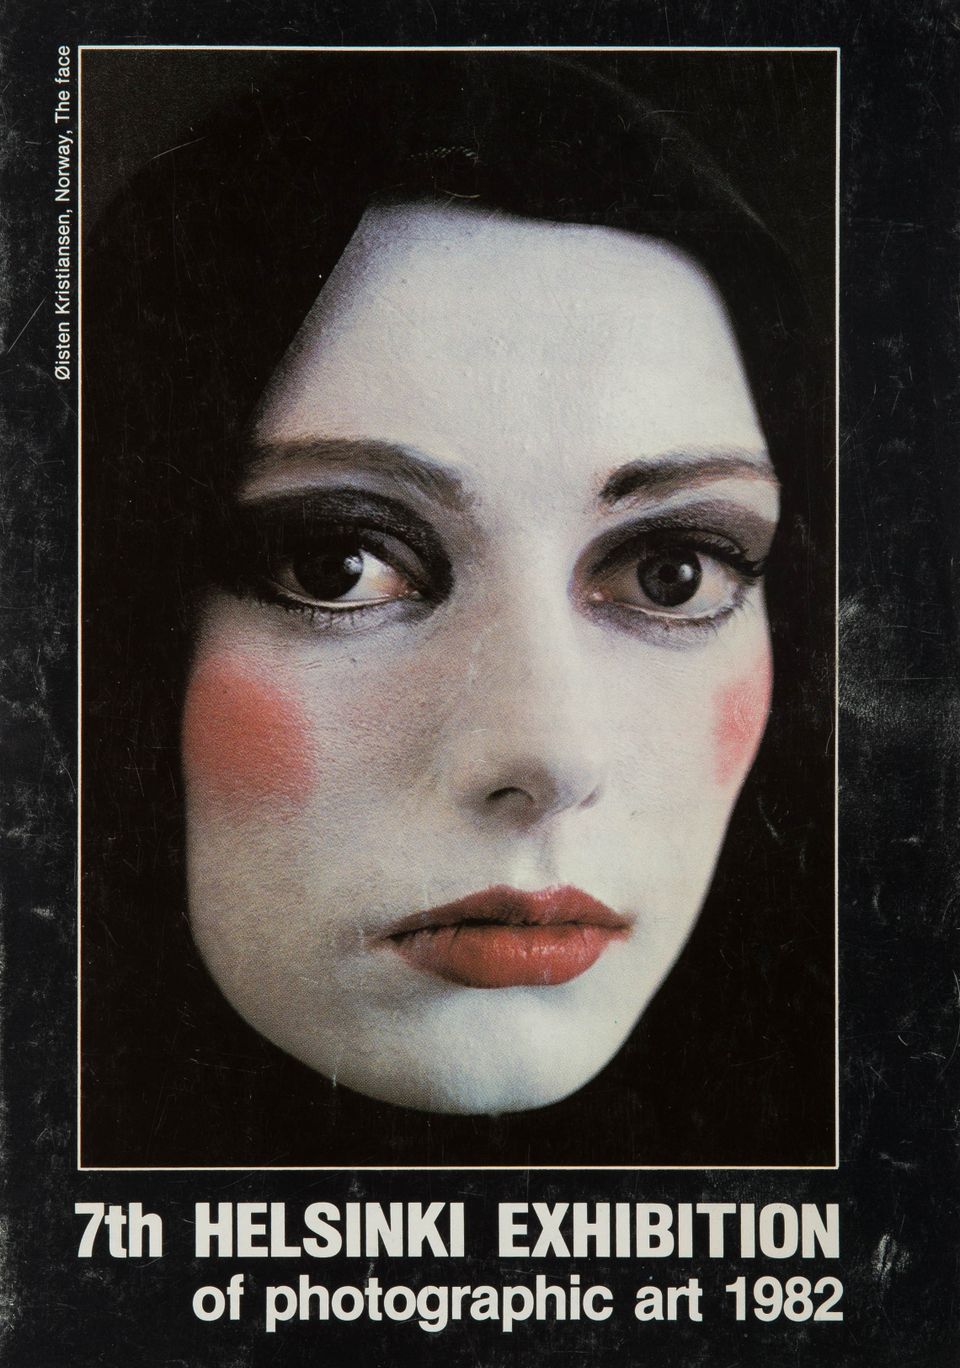 7th HELSINKI EXHIBITION of photographic art 1982